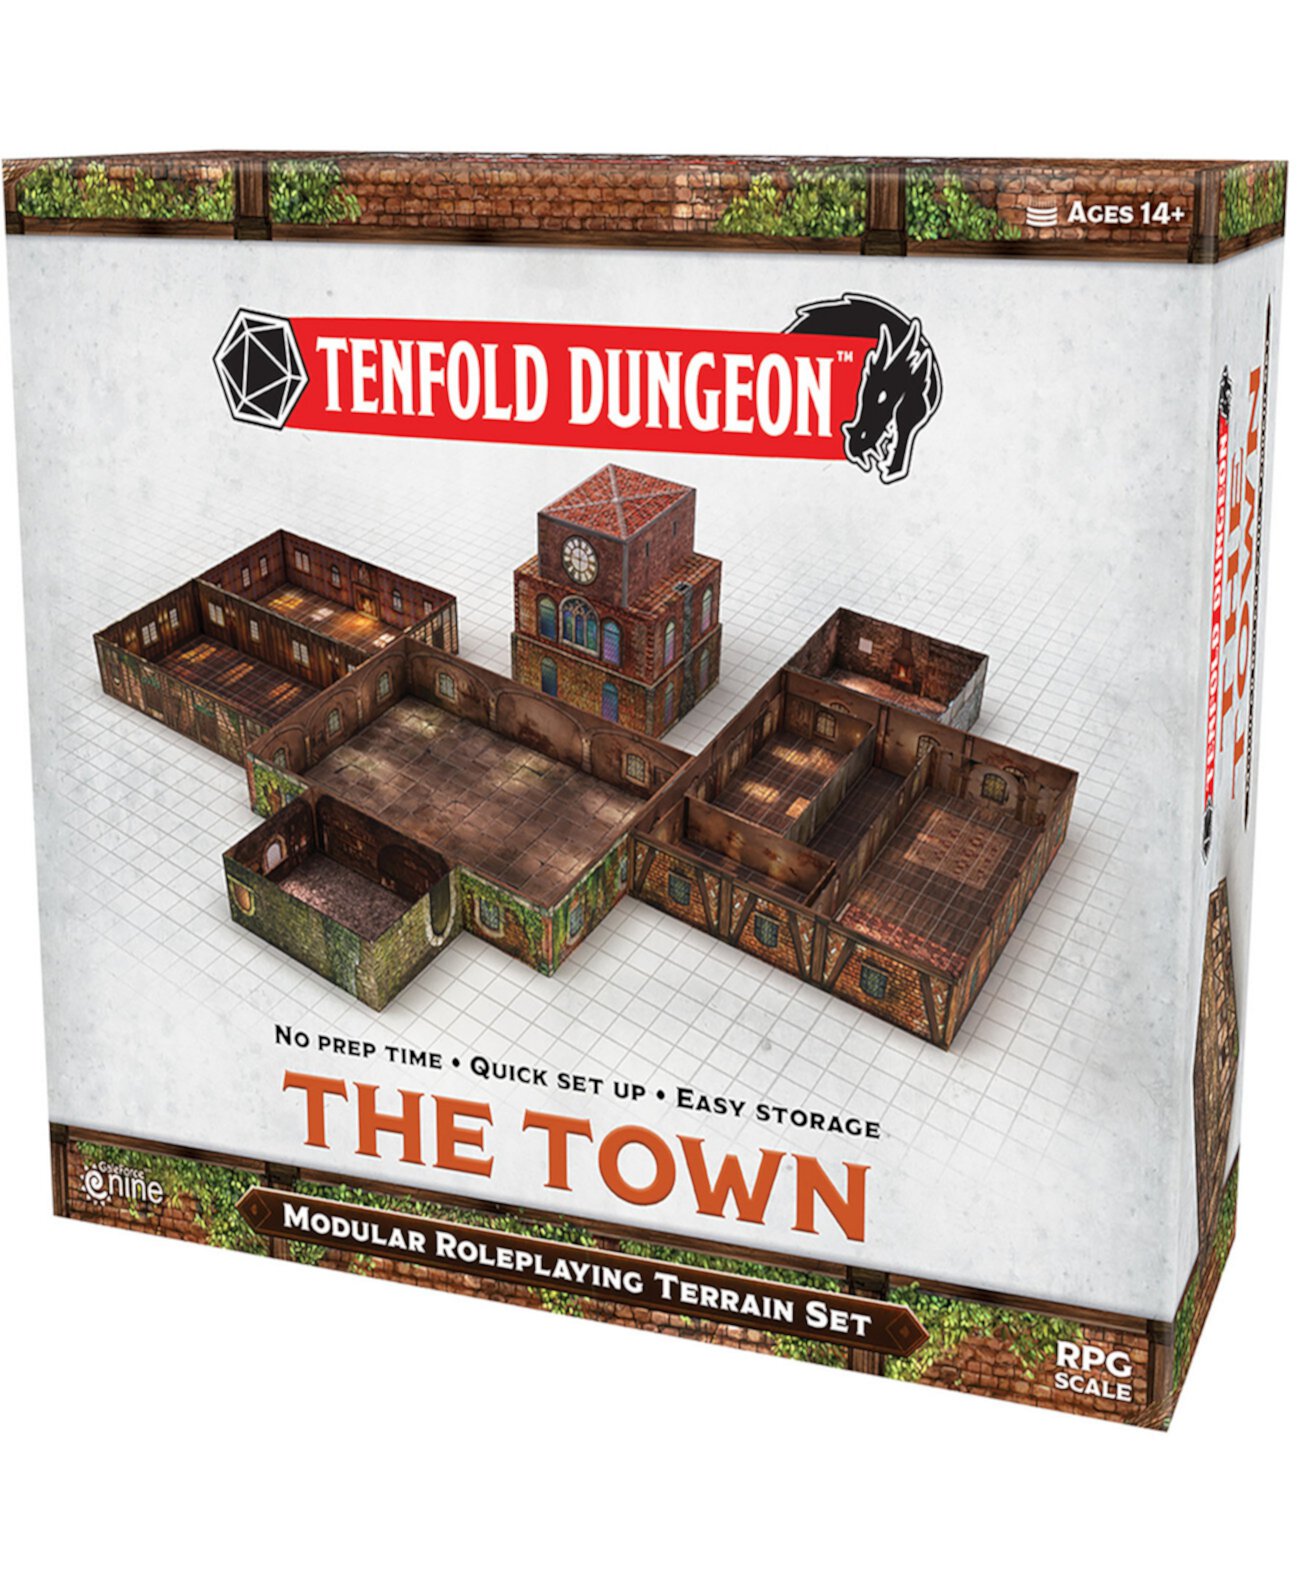 Tenfold Dungeon the Town Модульная ролевая игра Terrain Set 5e Ролевая игра Приключение Gale Force Nine